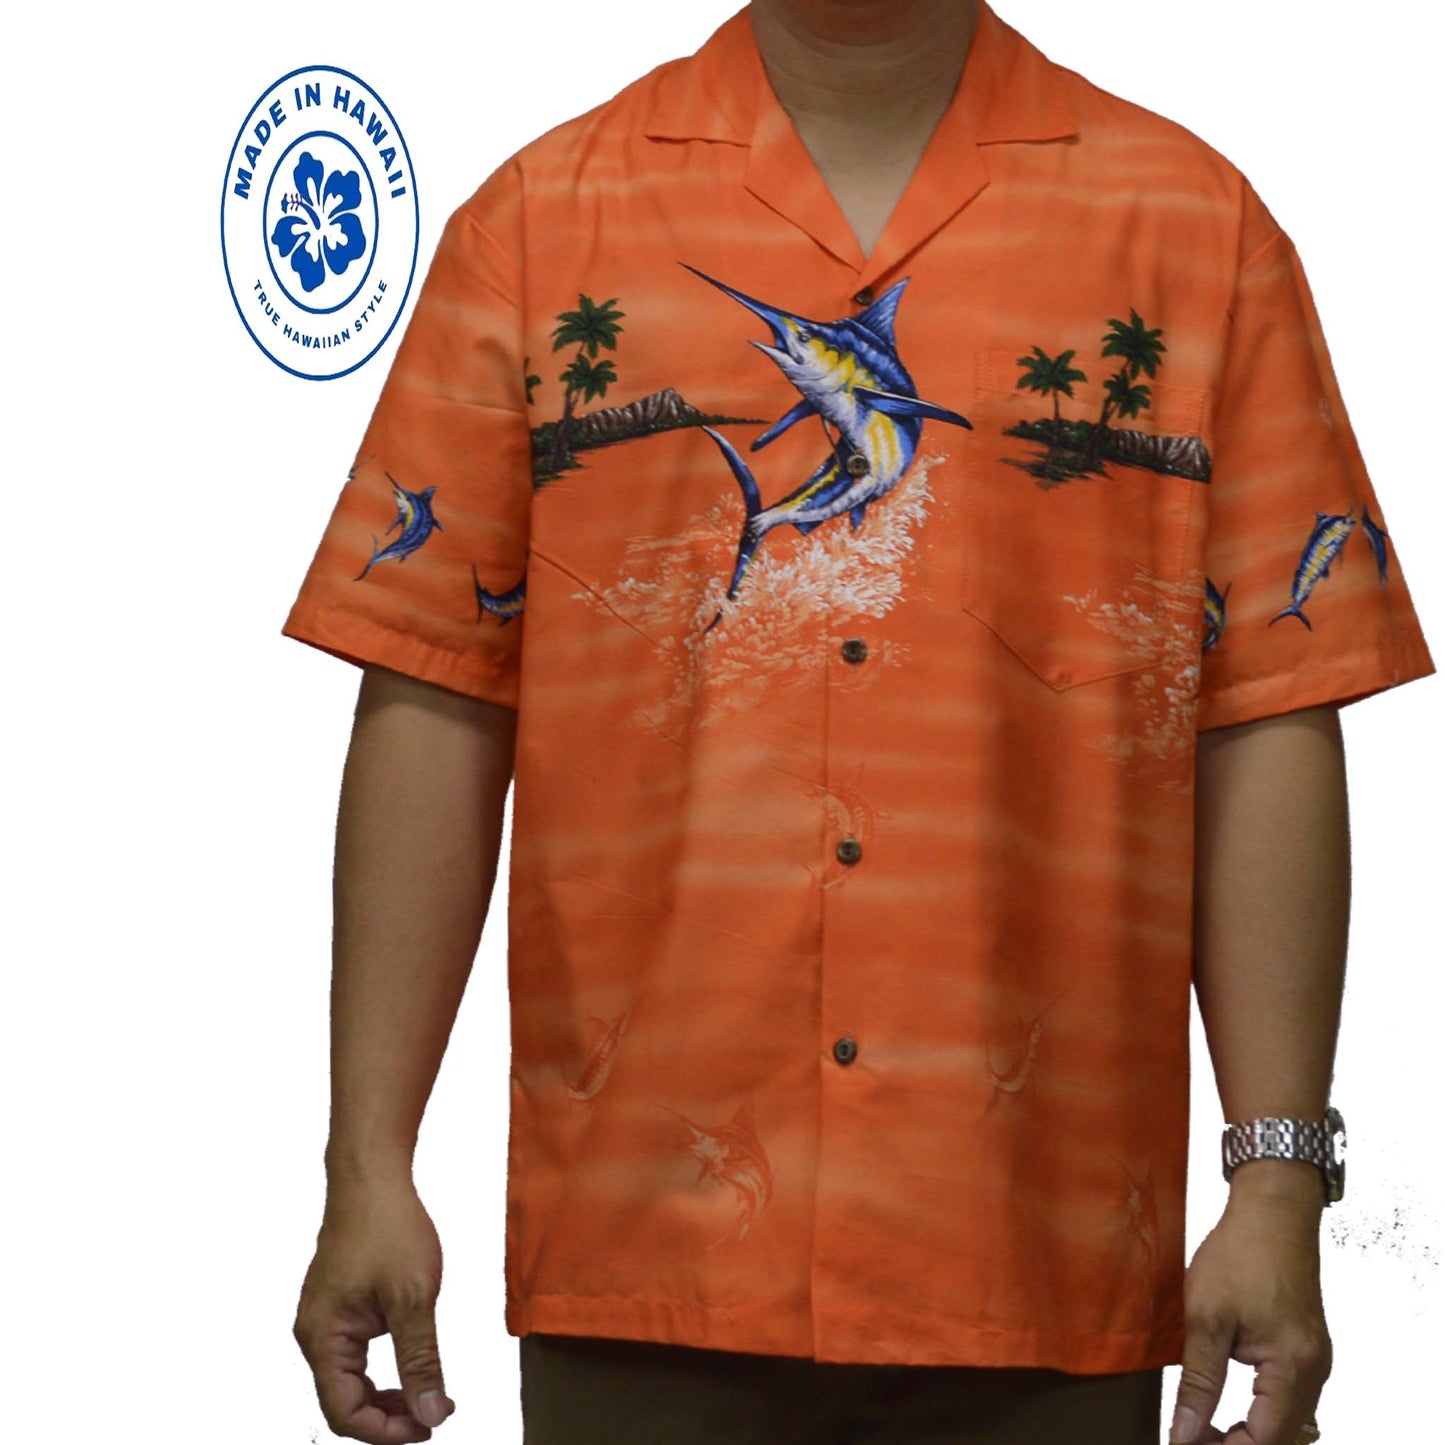 Ky's Hawaiian Cotton Shirt Marlin Breeze - Orange